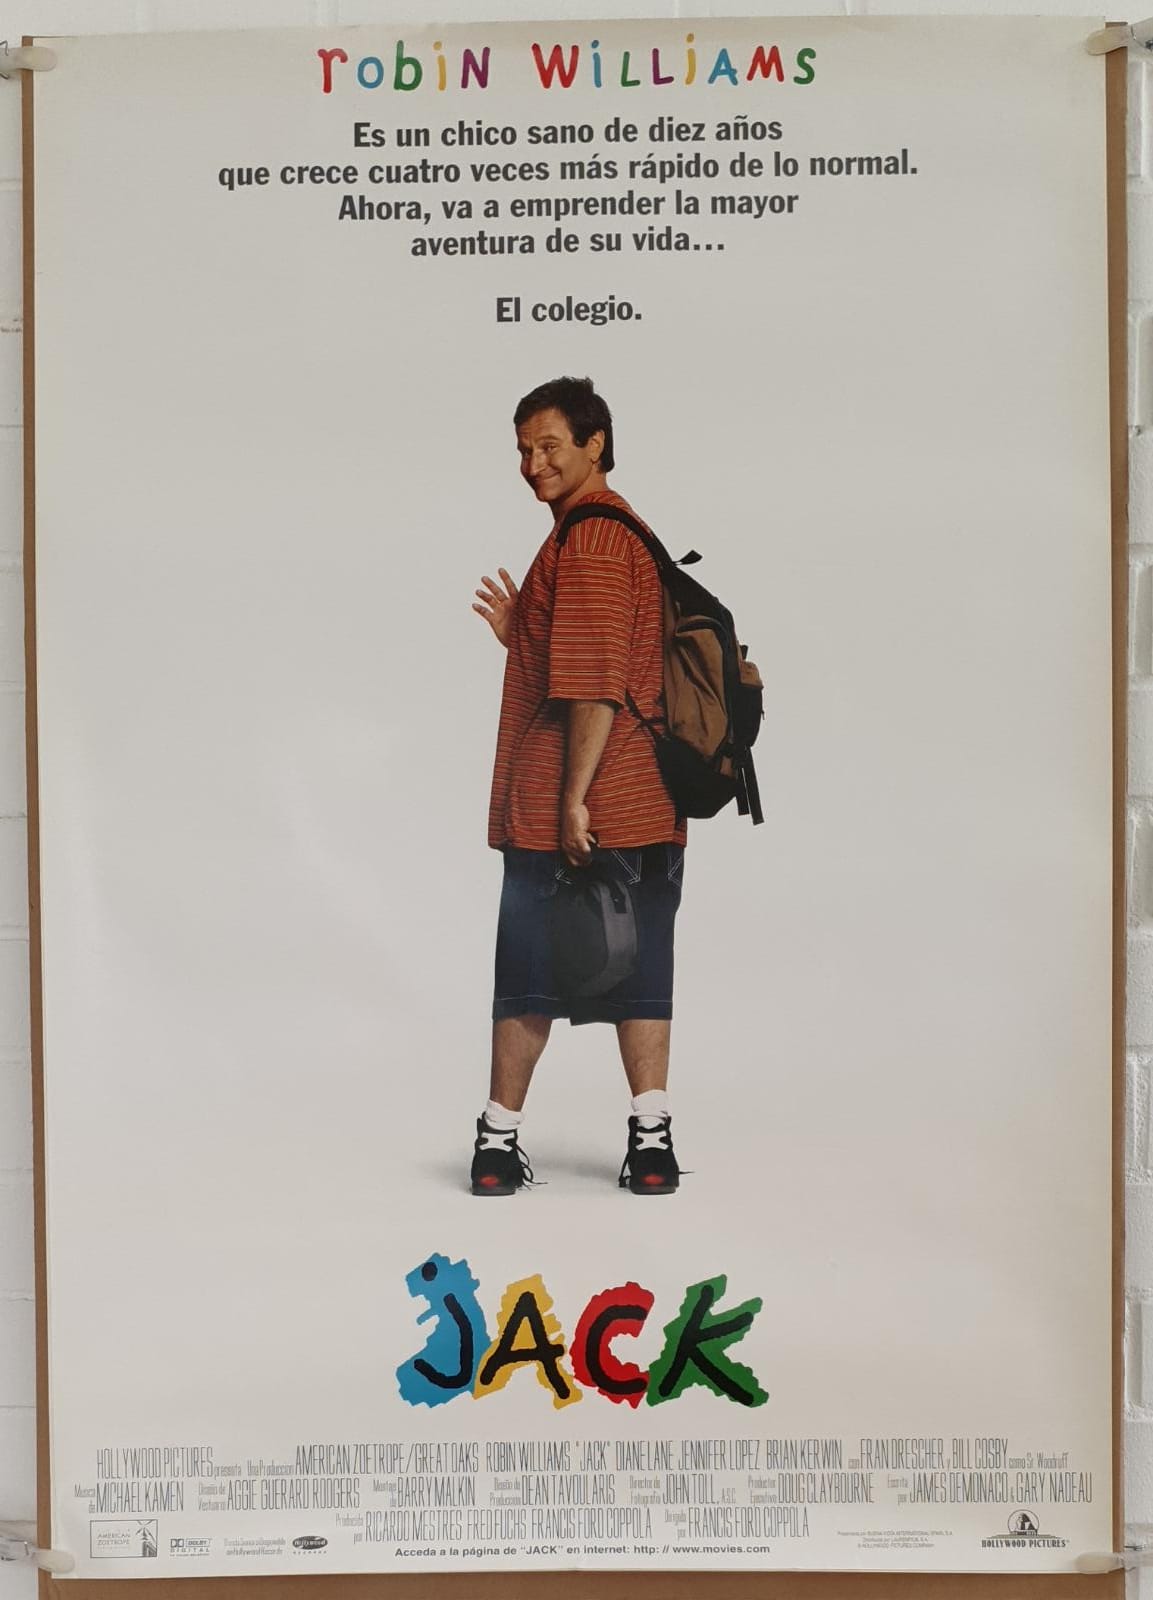 Jack (Robin Williams) Cartel (100x70) de Estreno